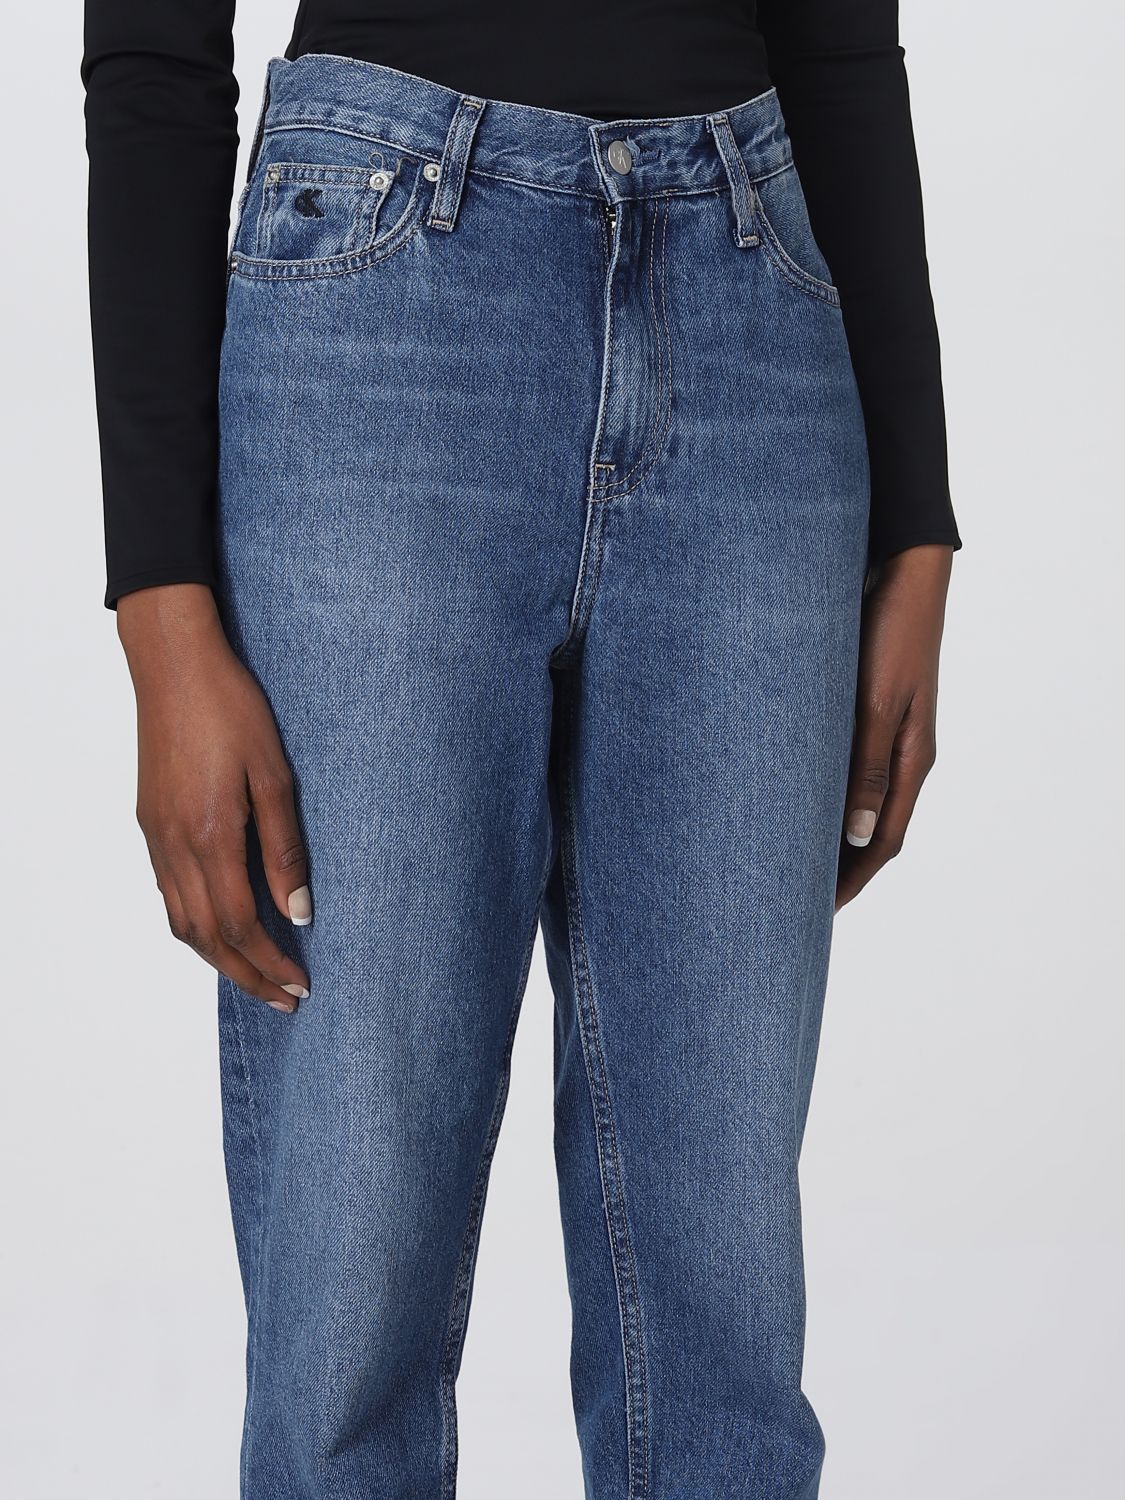 CALVIN KLEIN JEANS: jeans for woman - Denim | Calvin Klein Jeans jeans  J20J220194 online on 